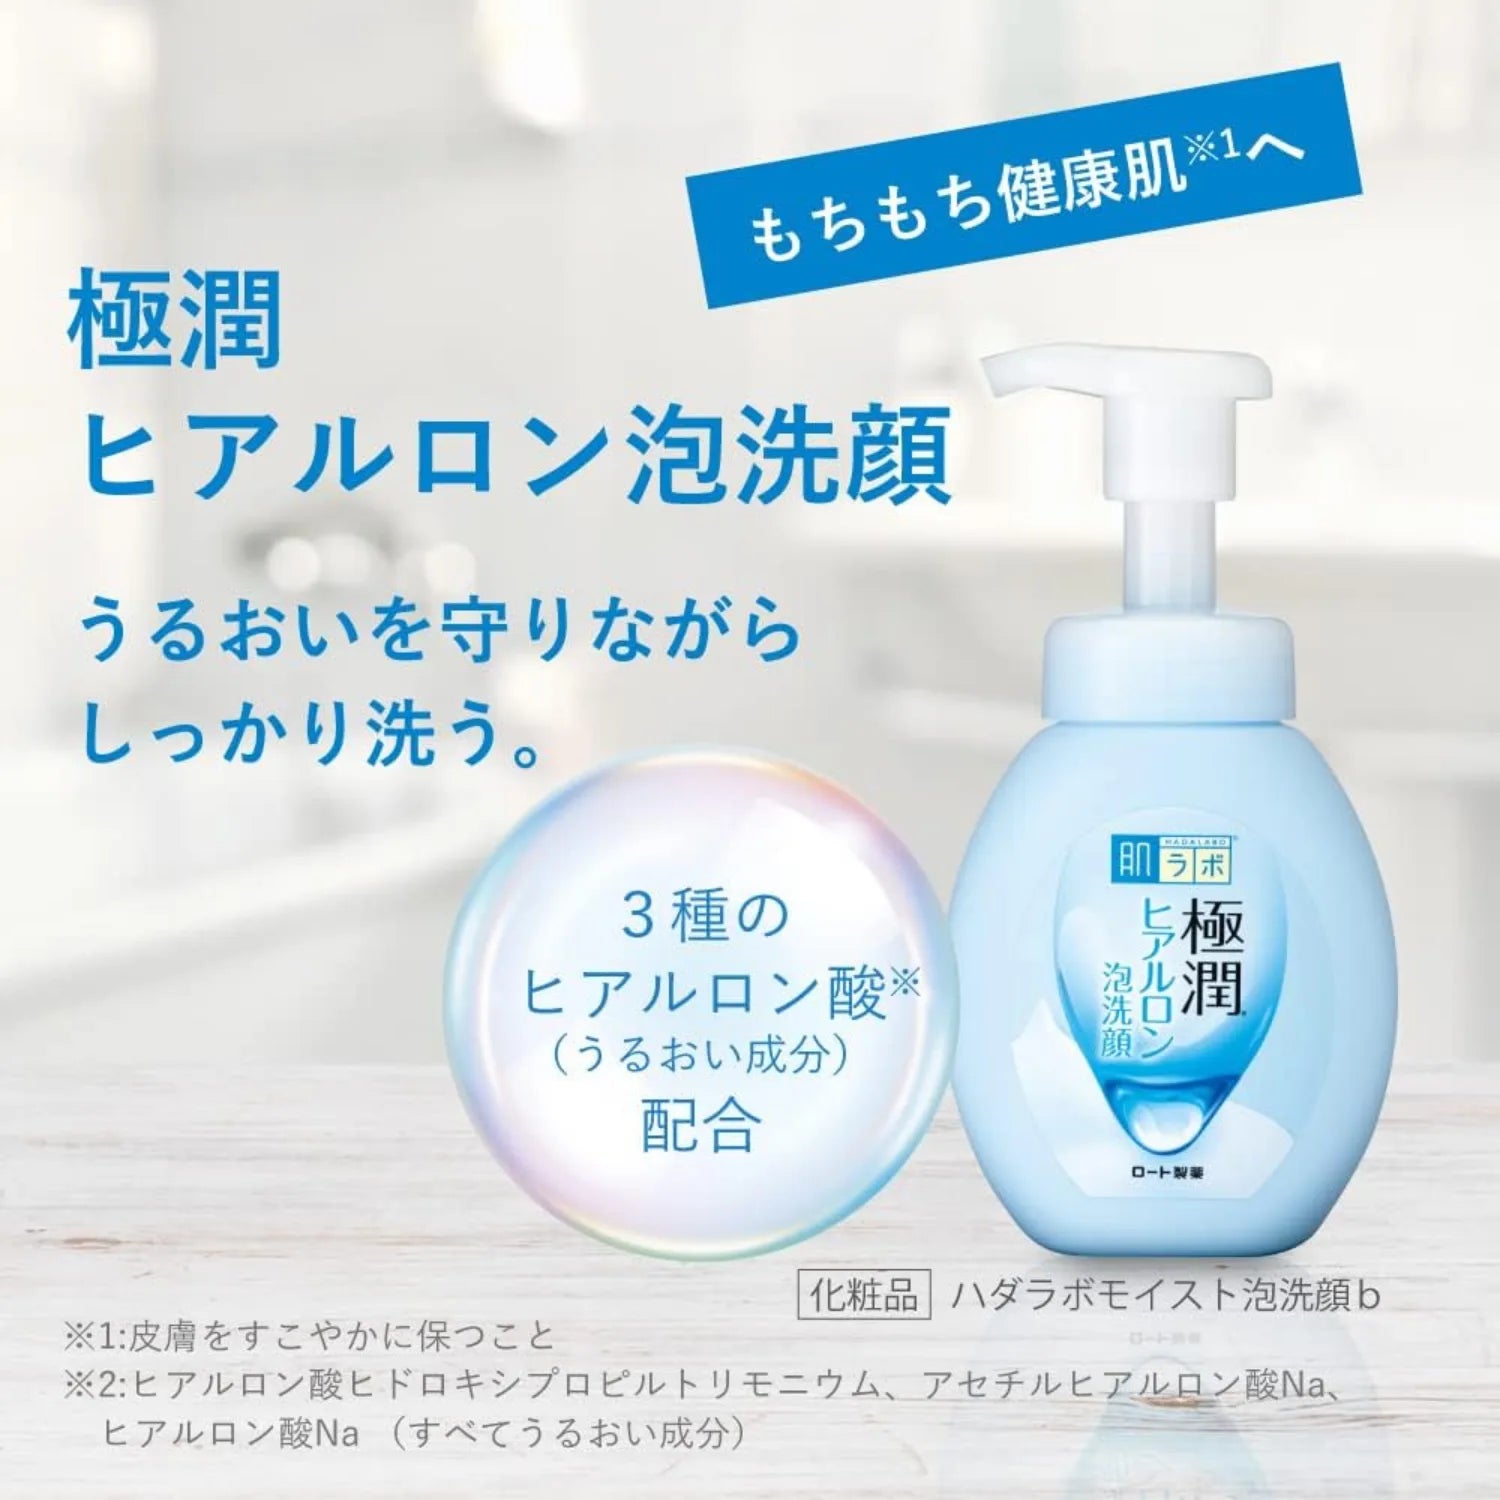 Hada Labo Foam Facial Cleanser 160ml + Refill 2 Units - Buy Me Japan